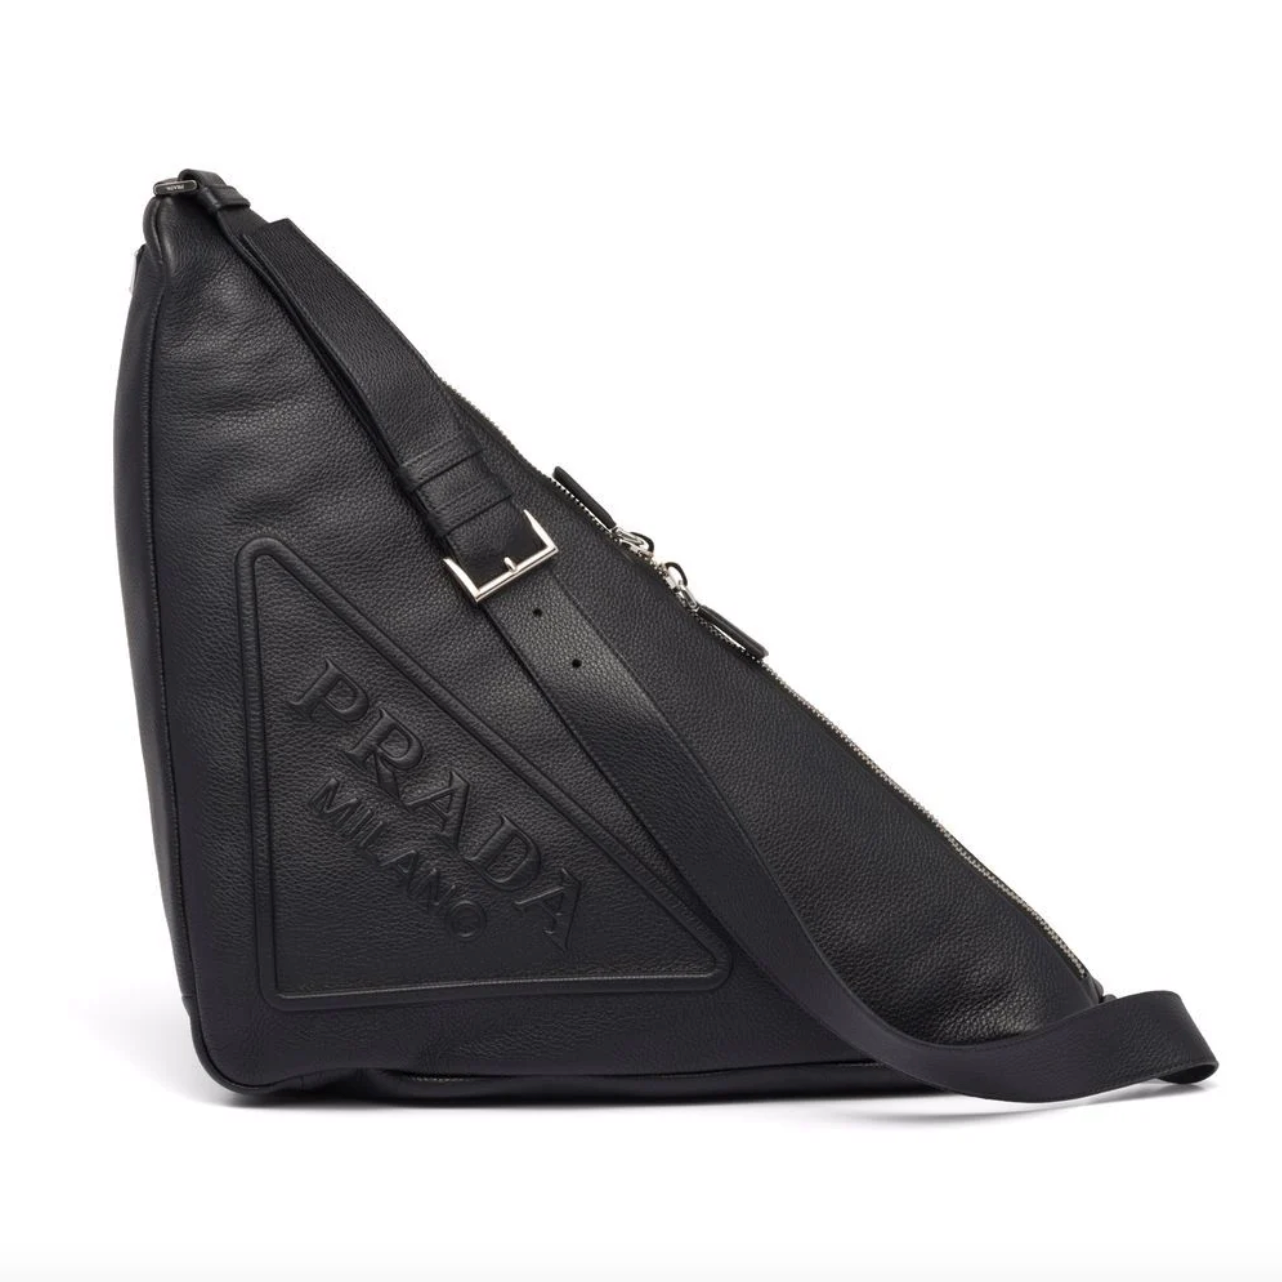 Prada Large leather Prada Triangle bag Crossbody